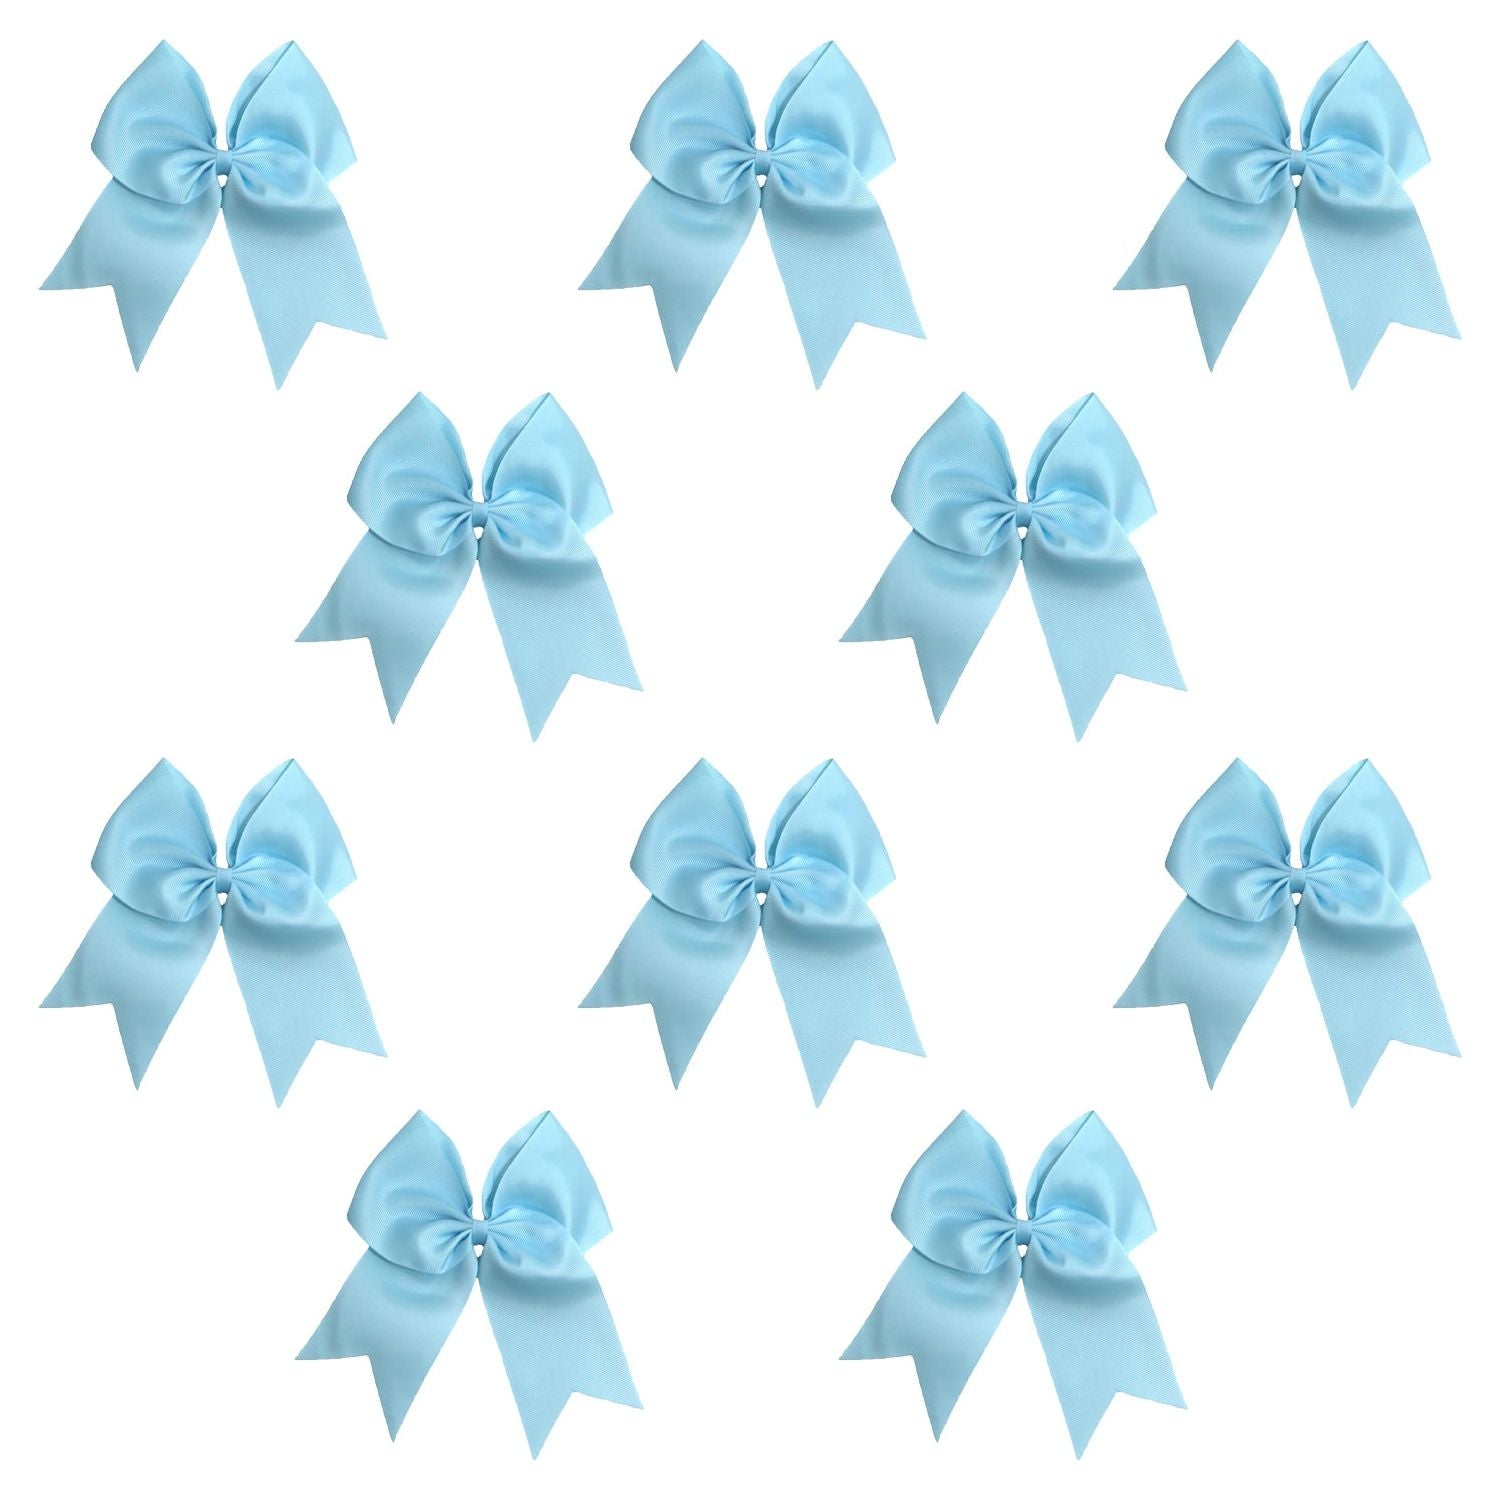 10 Carolina Blue Cheer Bows Large Hair Bow with Ponytail Holder Cheerleader Ponyholders Cheerleading Softball Accessories | Kenz Laurenz